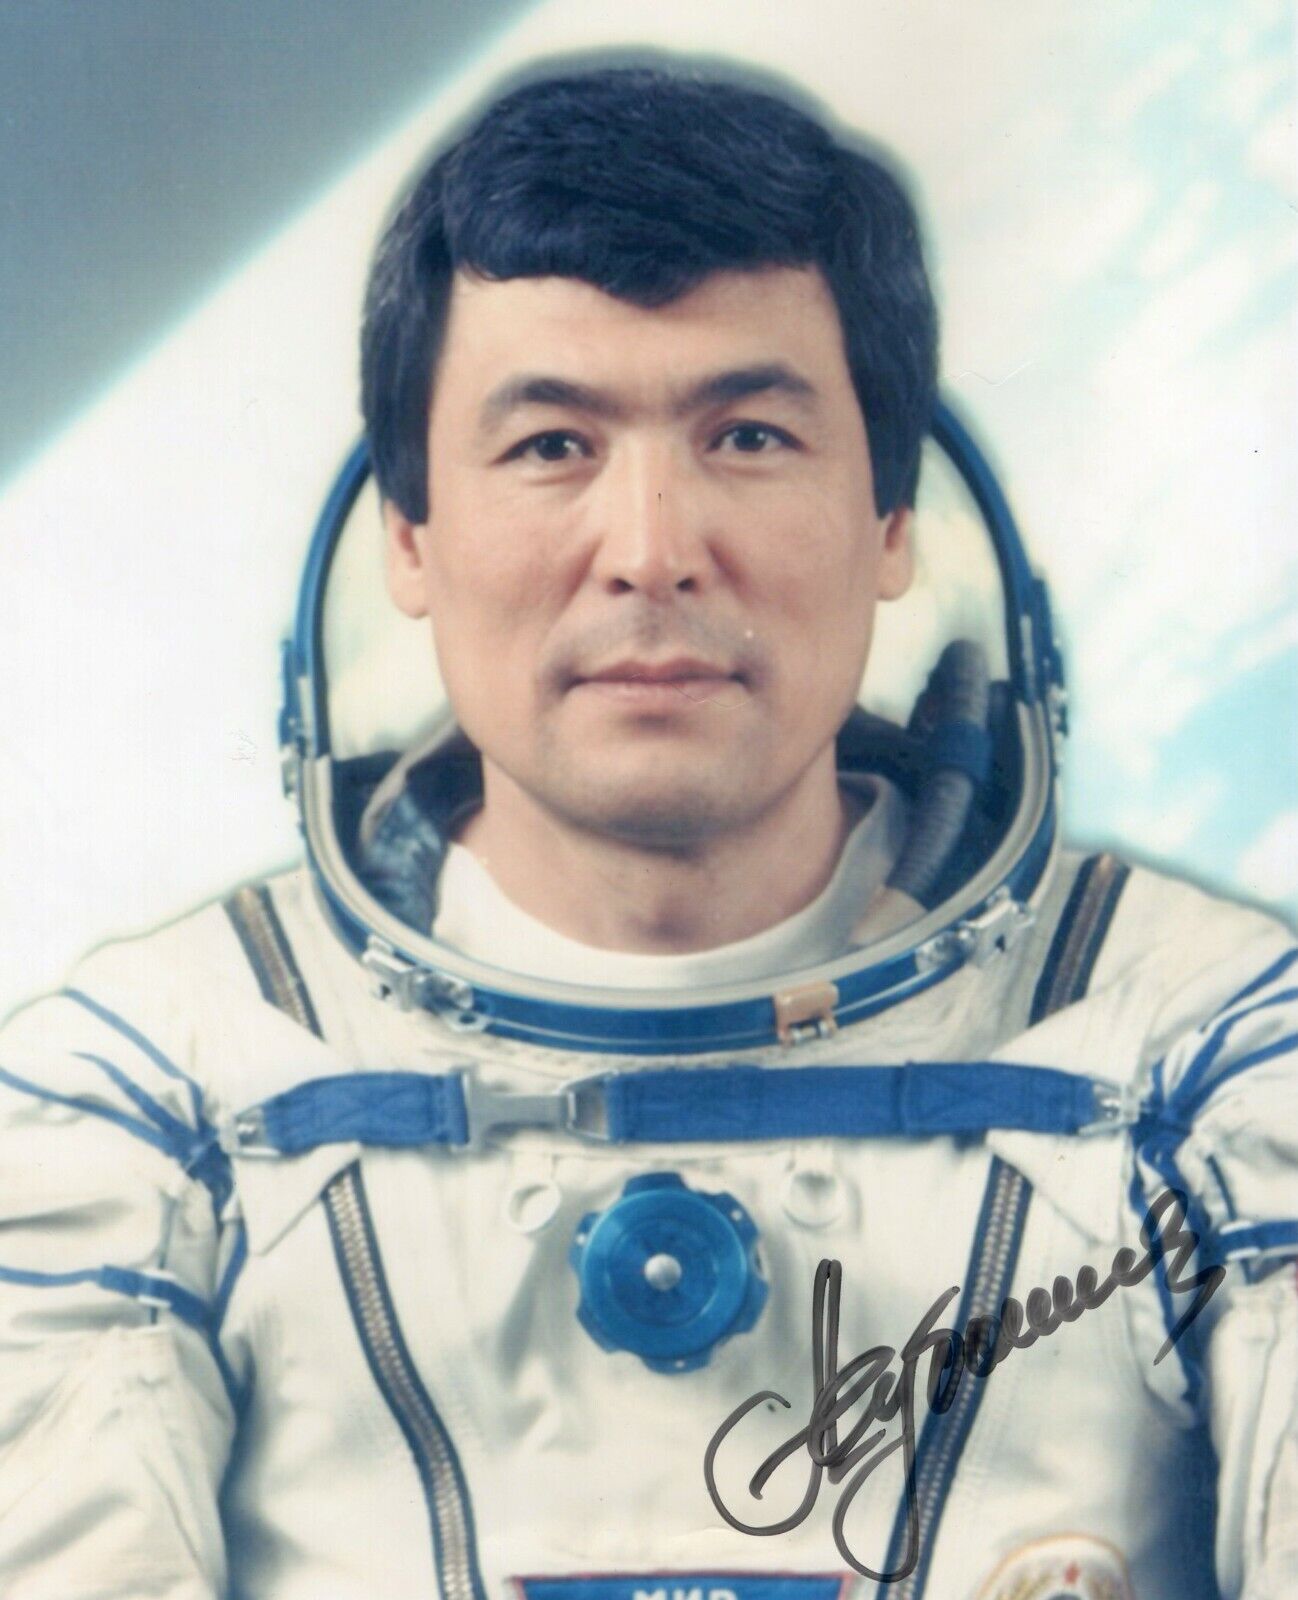 8x10 Original Autographed Photo of Kazakh Cosmonaut Toktar Aubakirov 